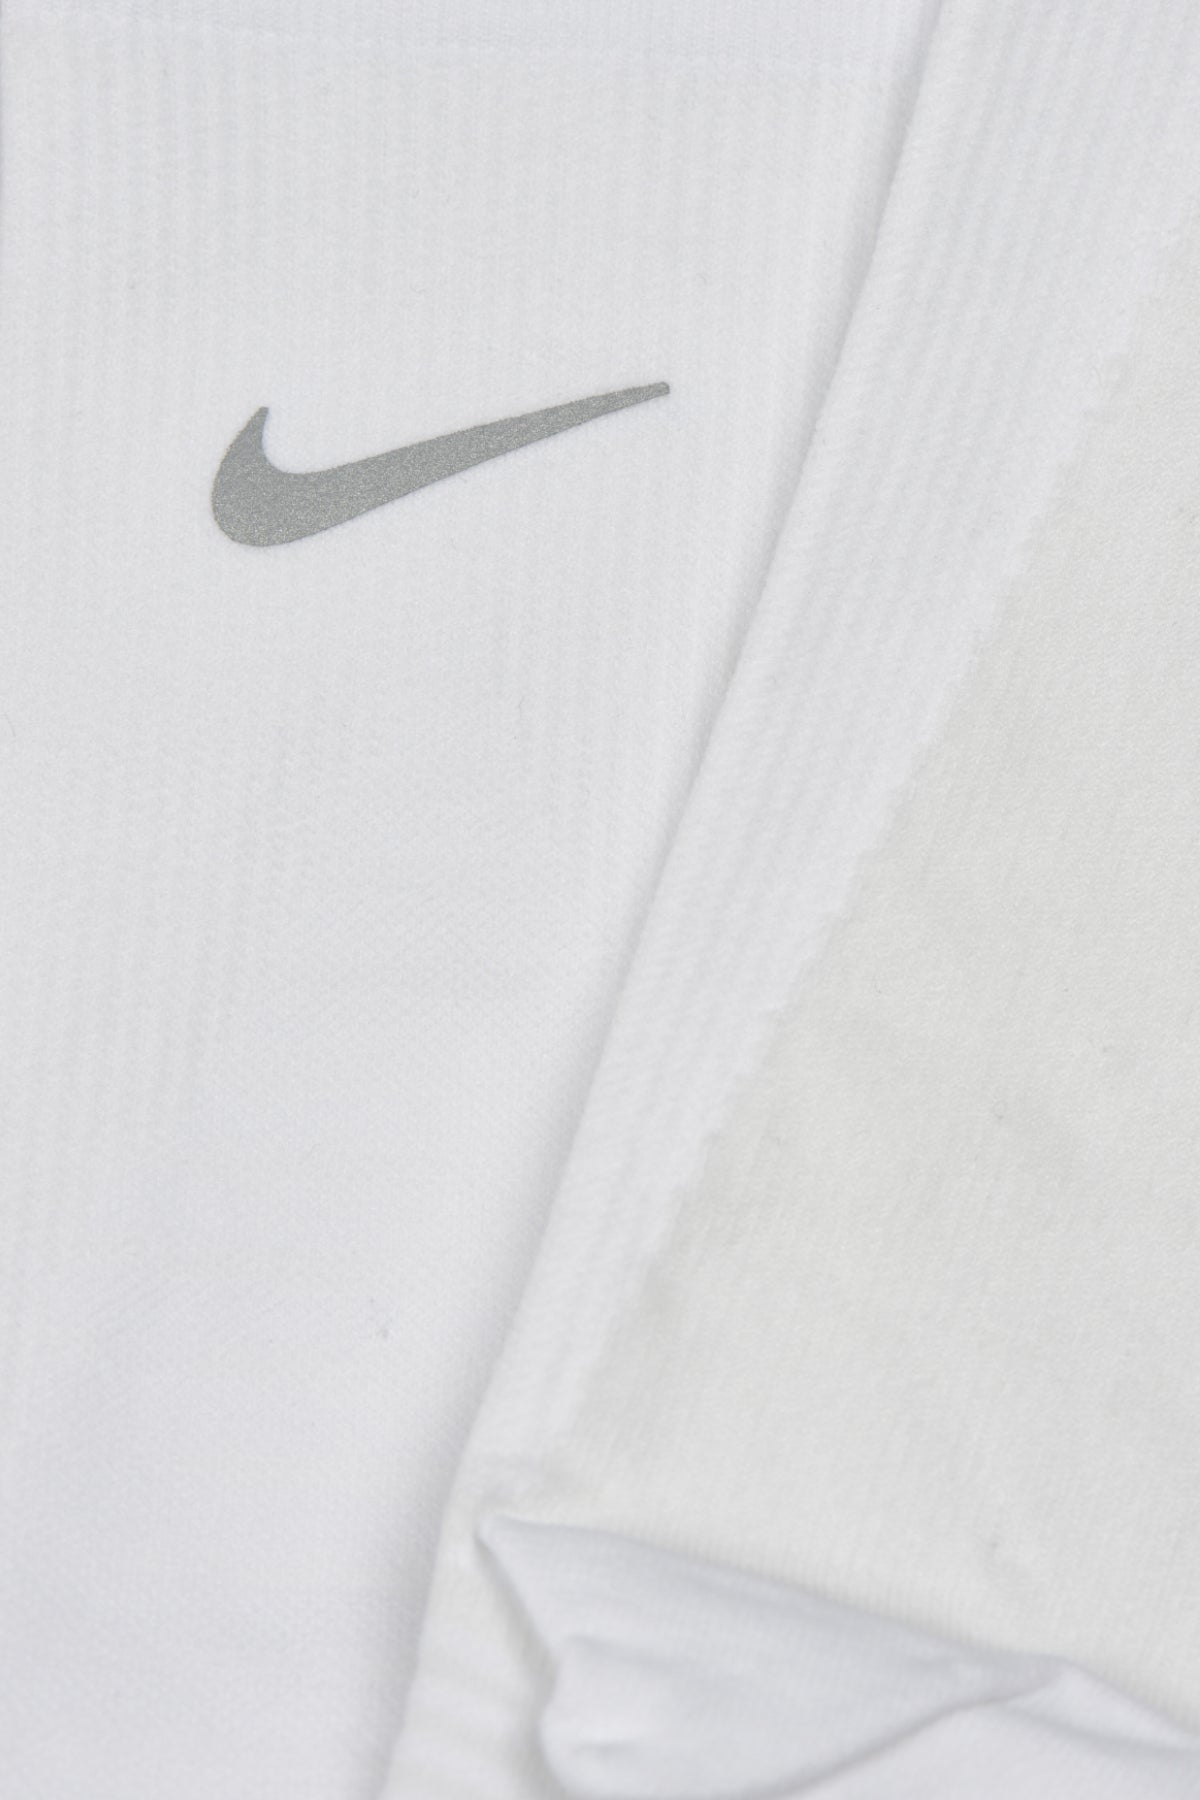 Nike - Spark Lightweight Socks